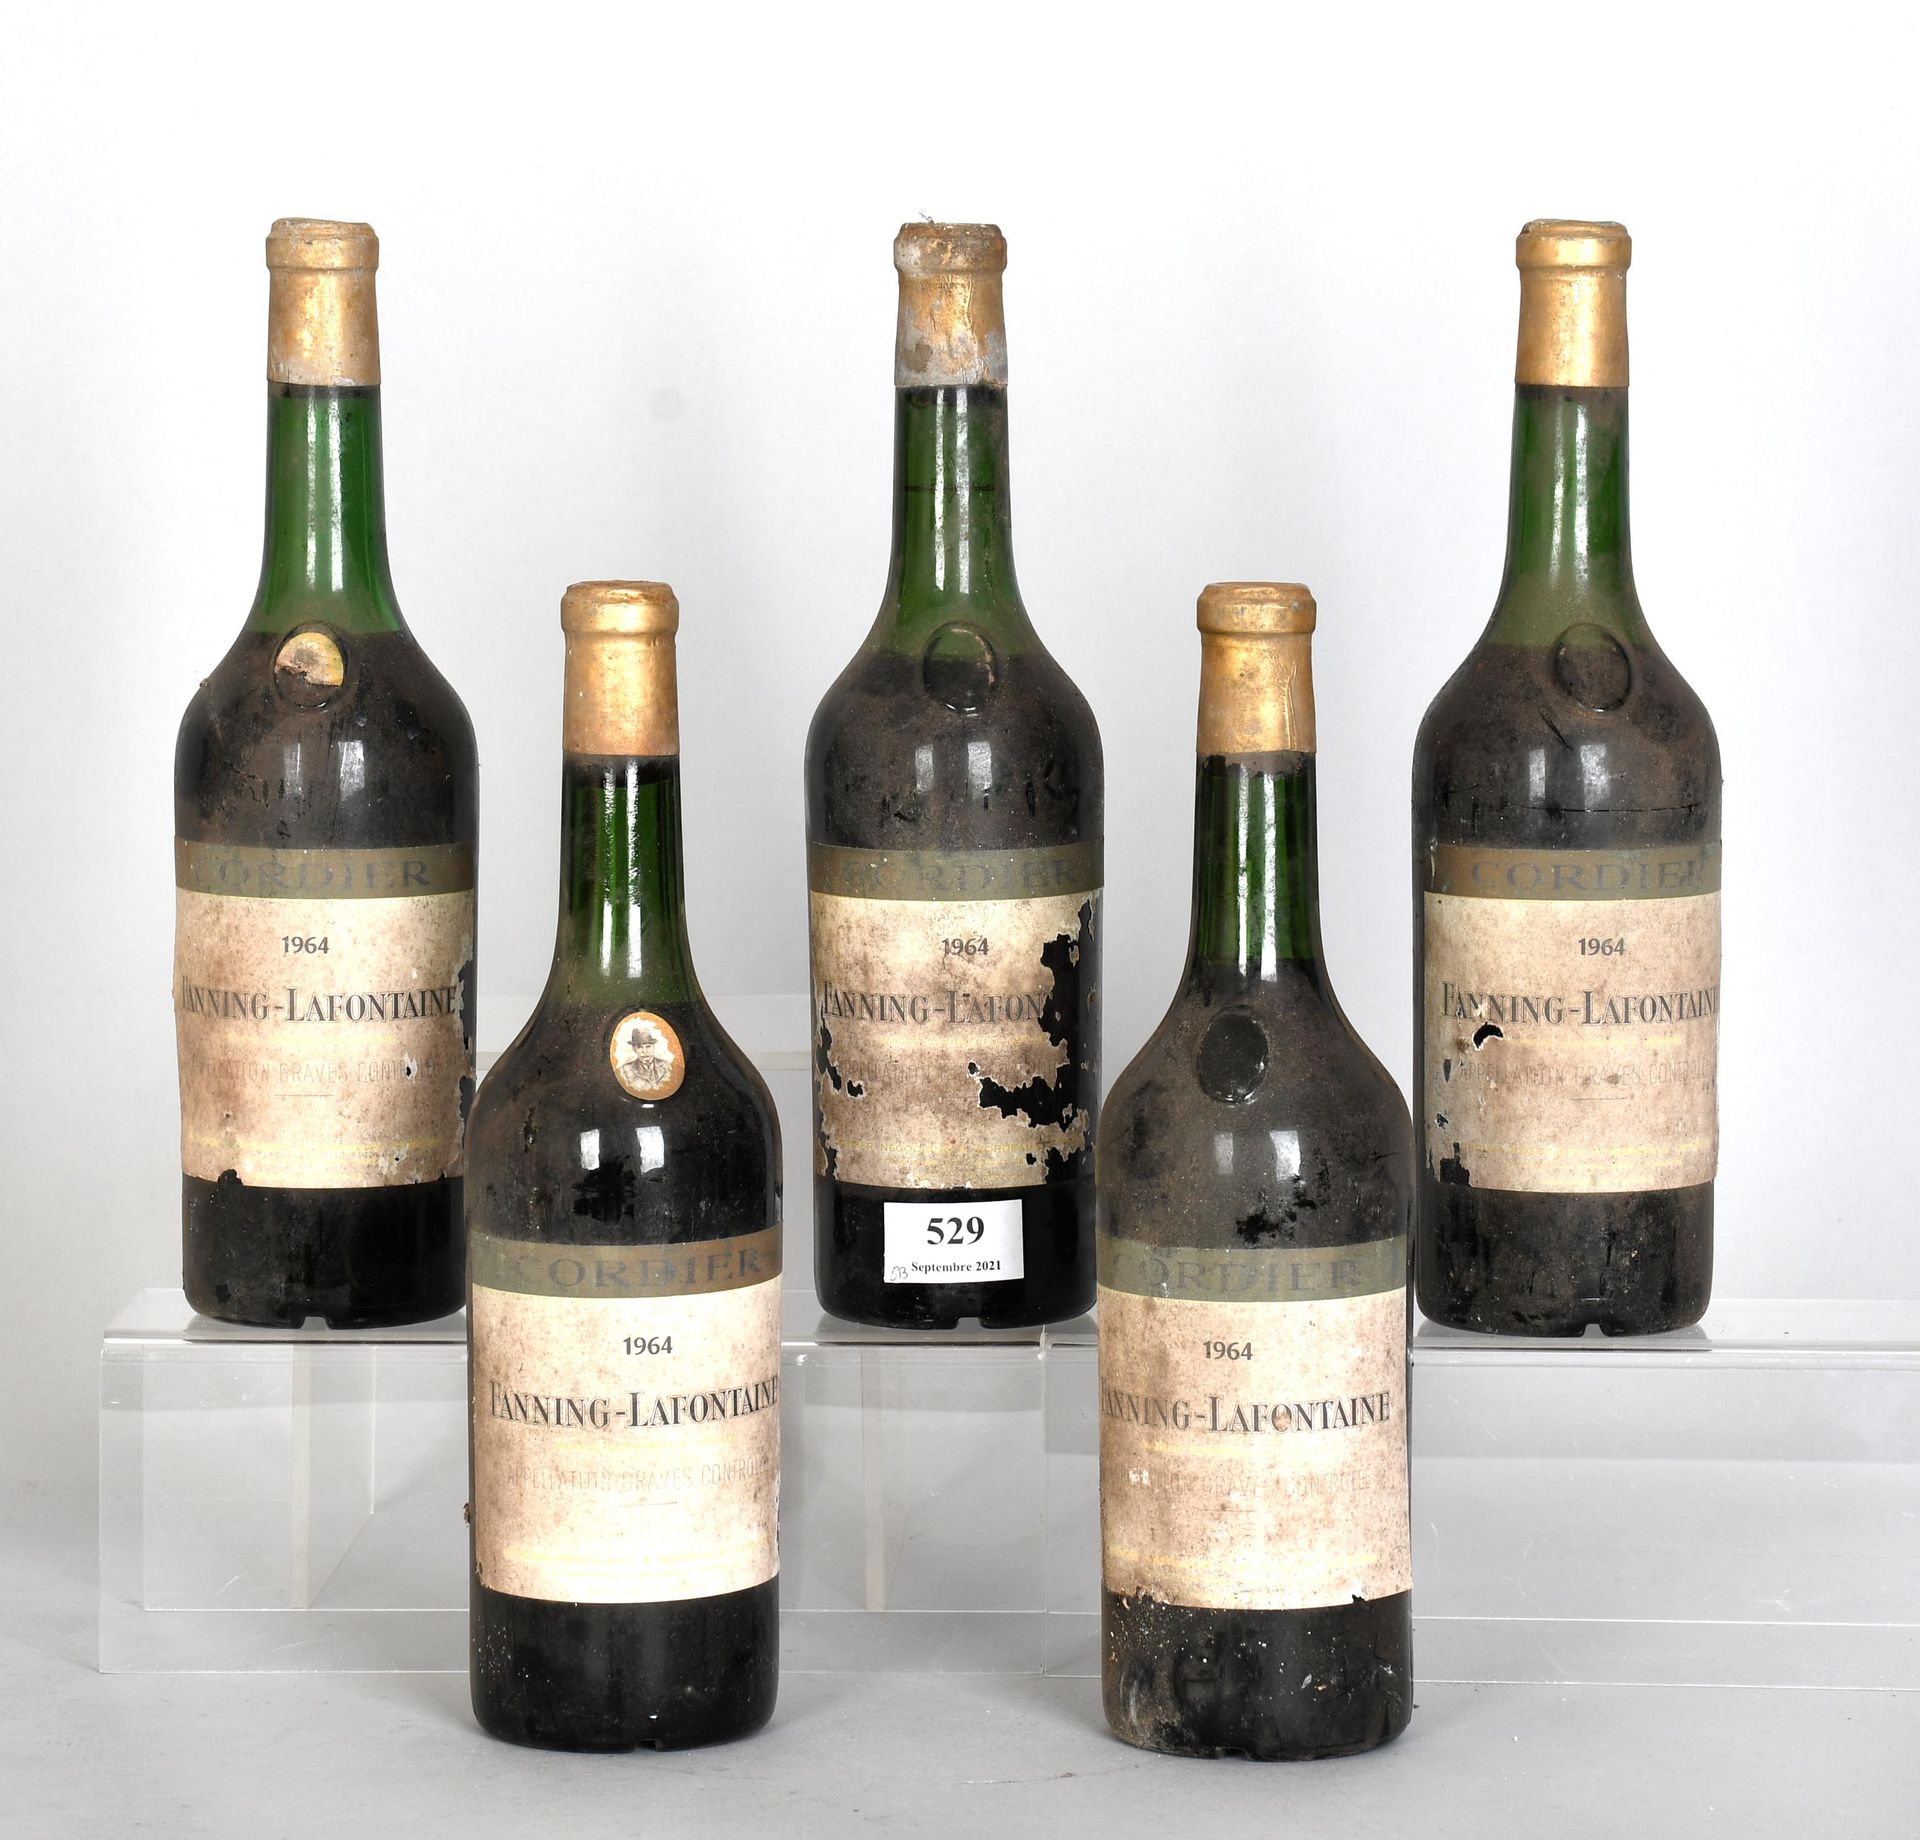 Null Fanning-Lafontaine 1964 - Cinco botellas de vino

Graves. Disminuye el nive&hellip;